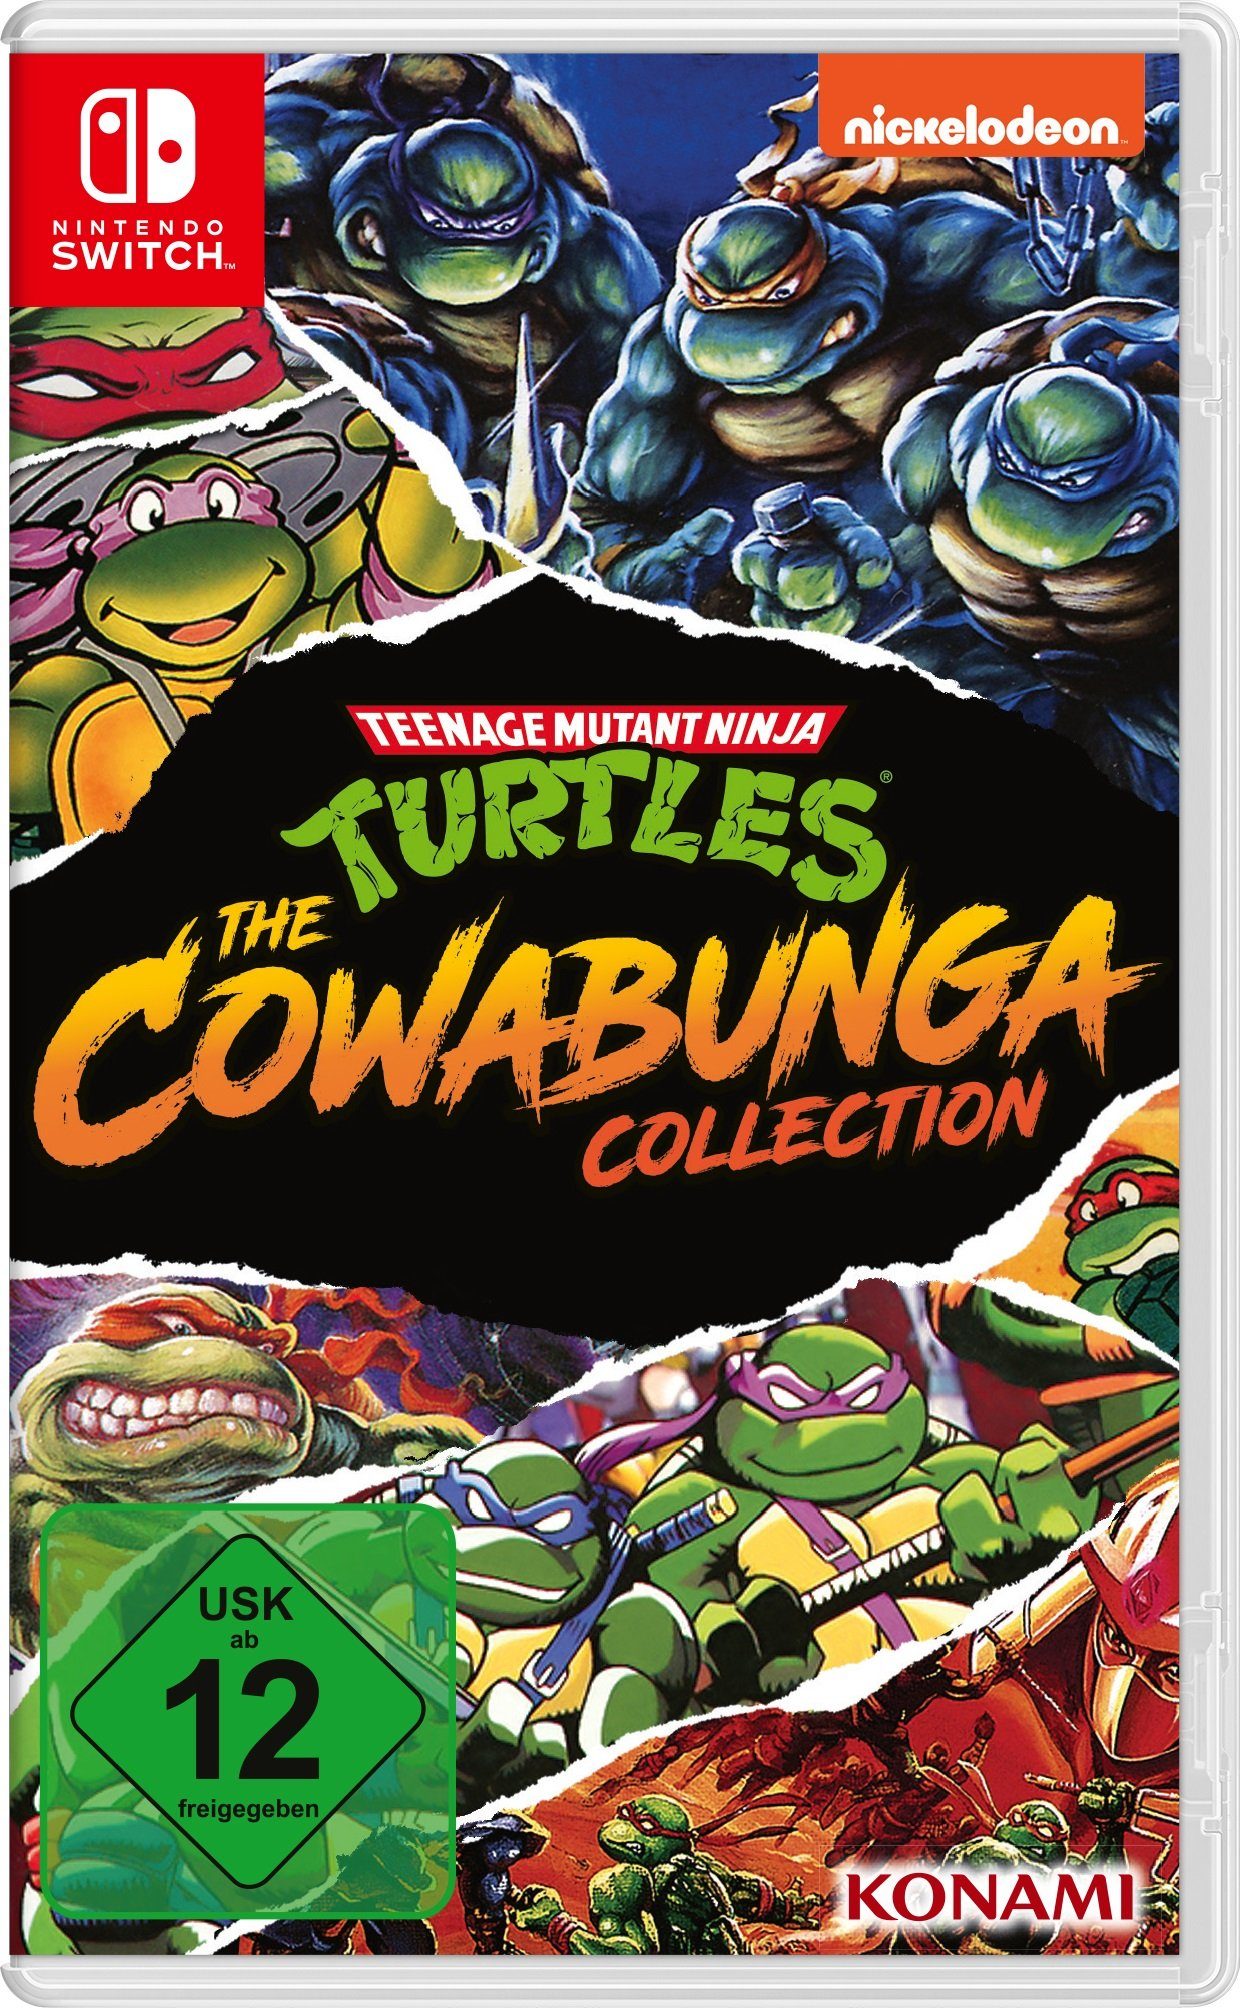 Ninja Switch Nintendo Teenage Turtles Collection Mutant Cowabunga Konami - The